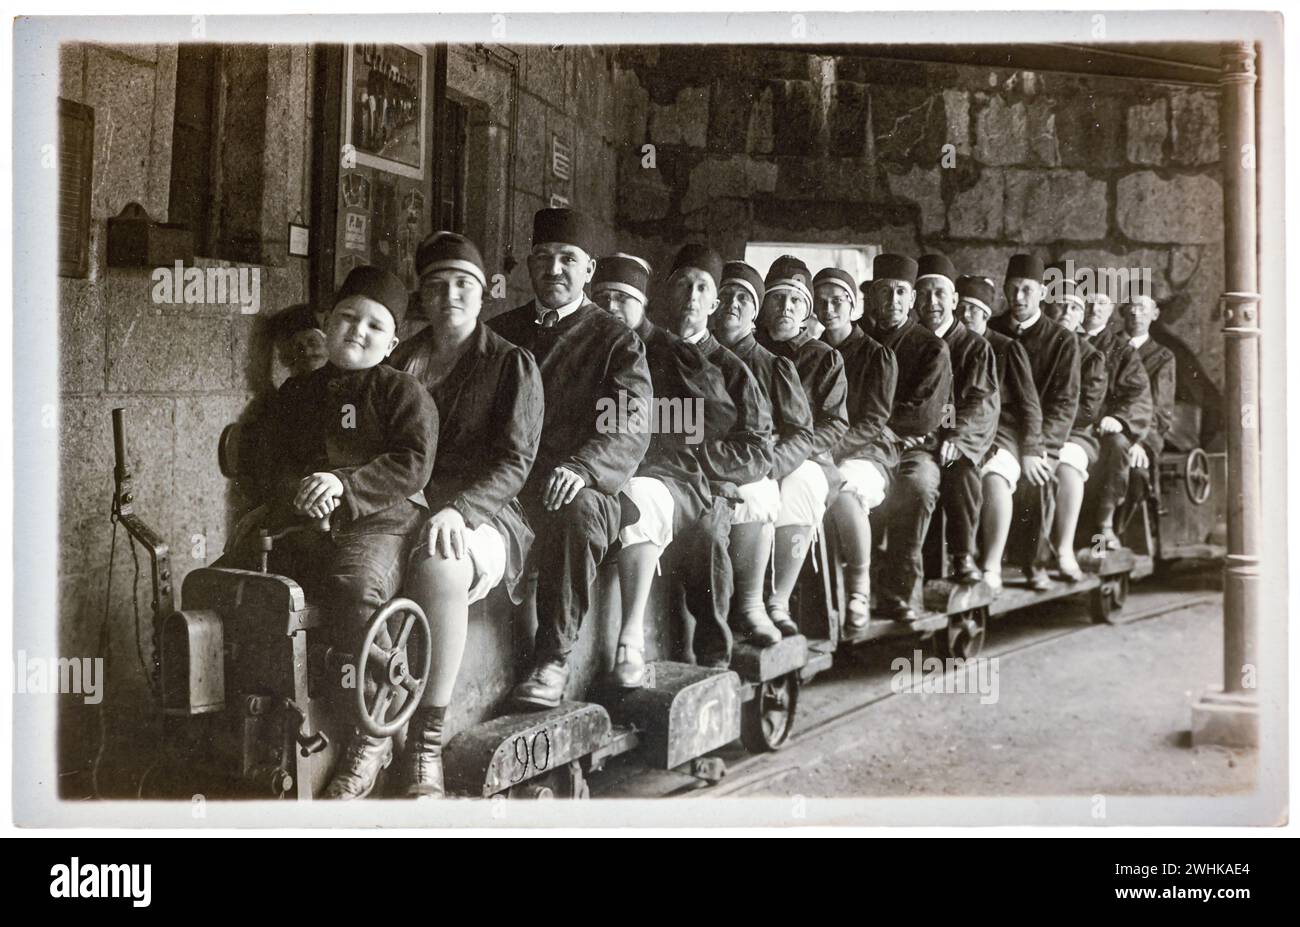 Vintage nostalgic photo of persons sitting on Salt mine wagon for work underground. Stock Photo